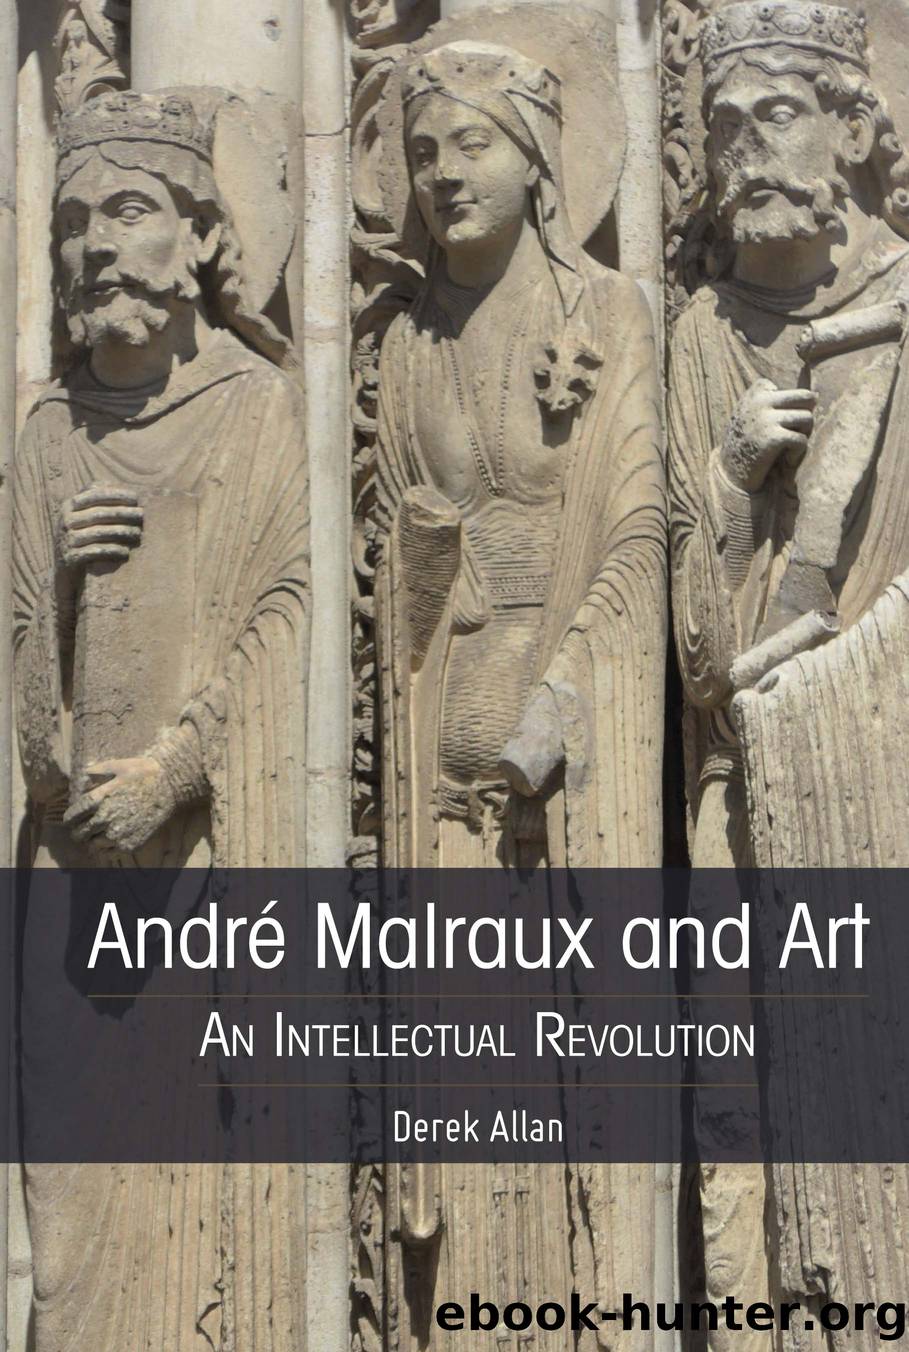 Andr Malraux and Art by Derek Allan;